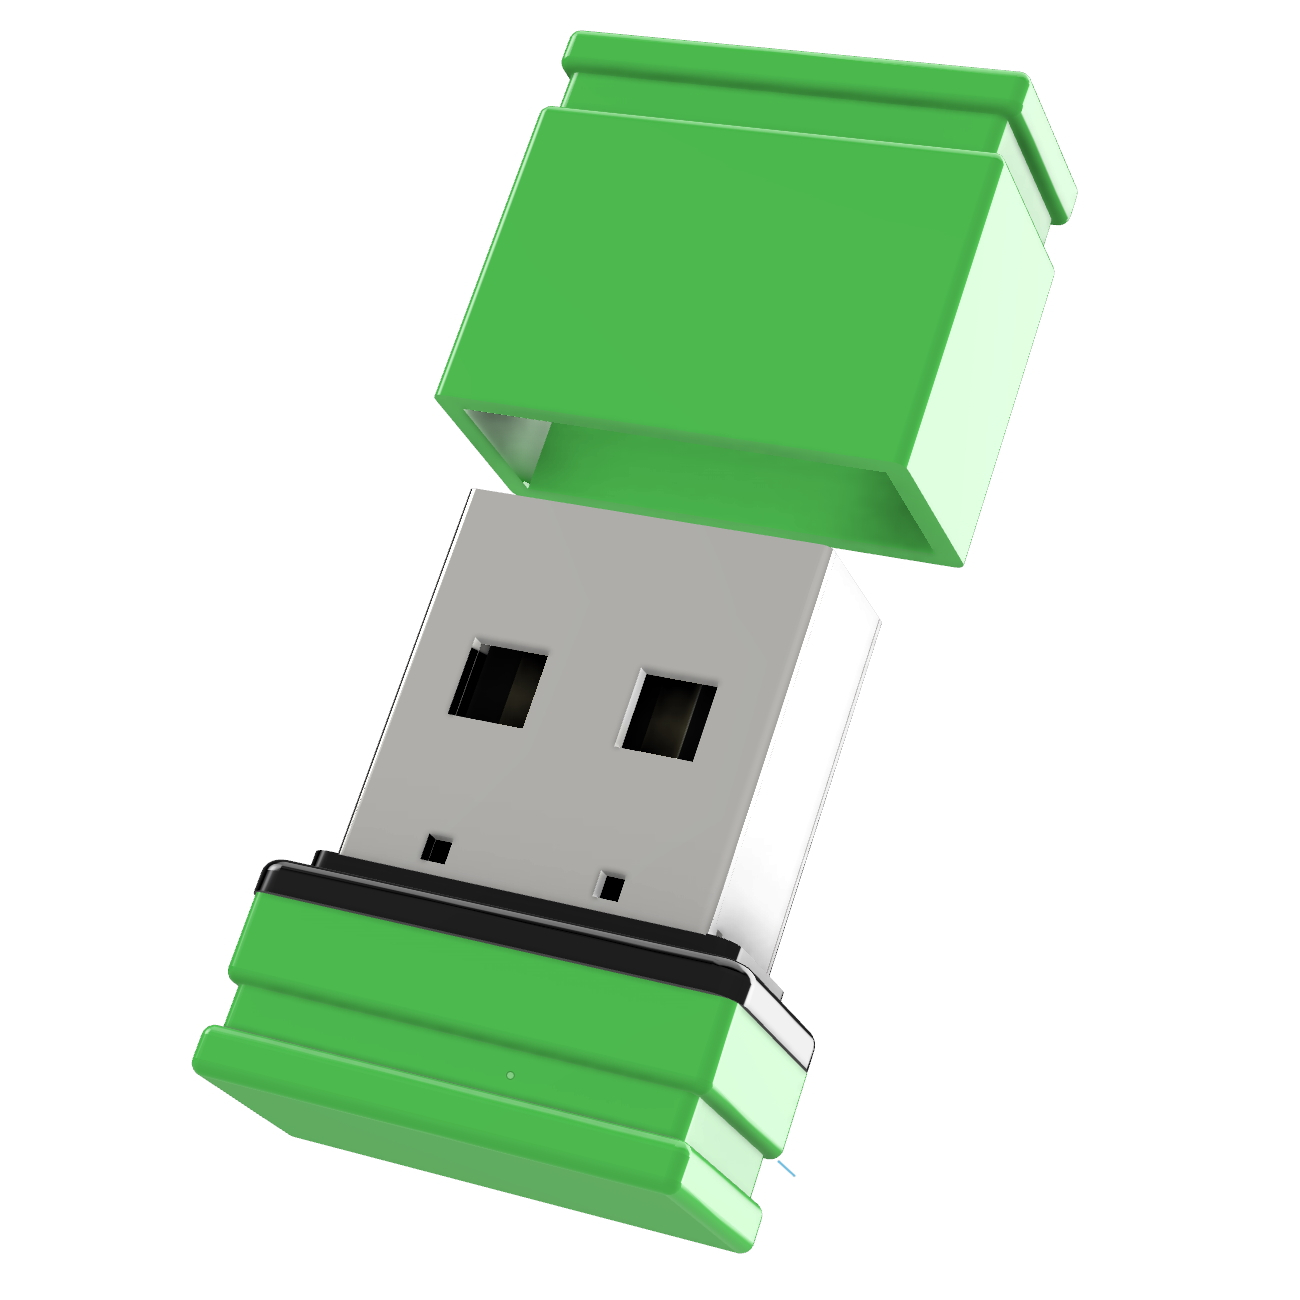 USB USB-Stick Mini GERMANY 1 P1 GB) (Grün/Schwarz, ®ULTRA